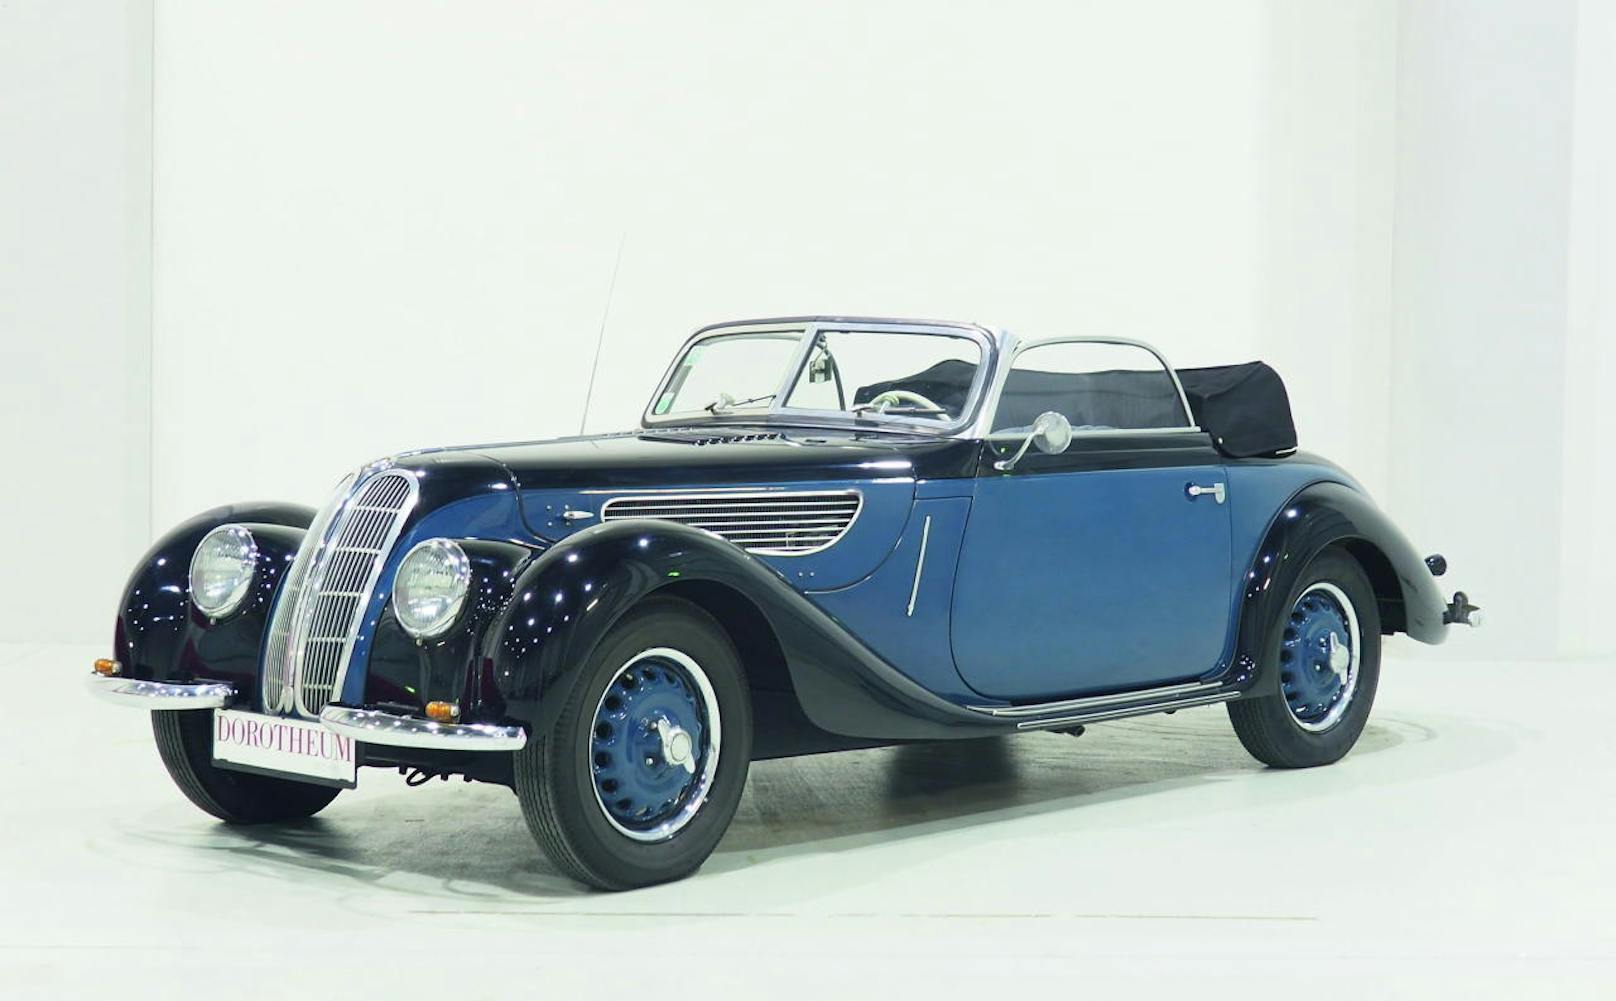 1939 BMW 327/28 Sport-Kabriolett;
Laufleistung: 36.544 km (abgelesen), Hubraum: 1.971 ccm/R6, Leistung: 80 PS, Getriebe: 4-Gang (ZF)